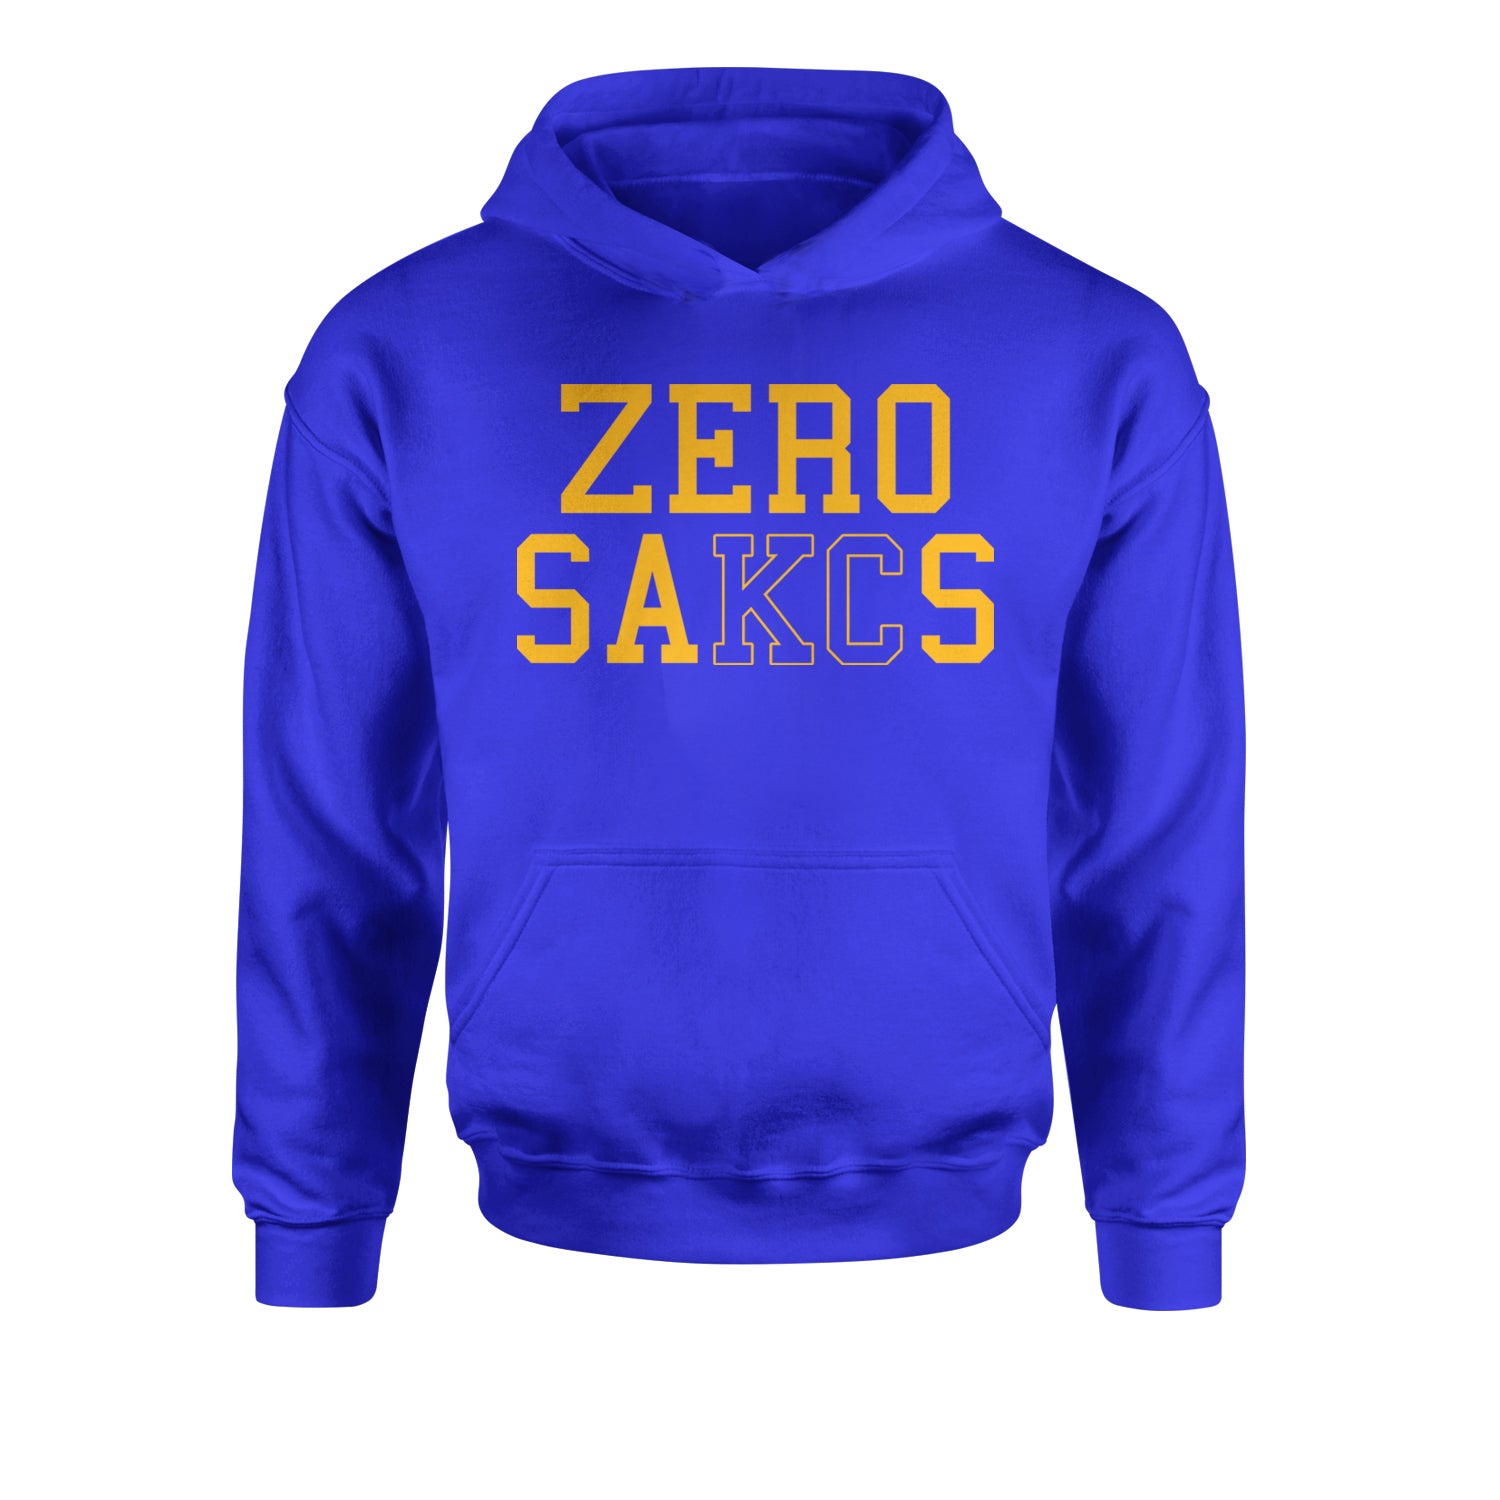 Zero Sacks Kansas City Youth-Sized Hoodie ball, brown, foot, football, kelc, orlando, patrick, sacks, sakcs by Expression Tees